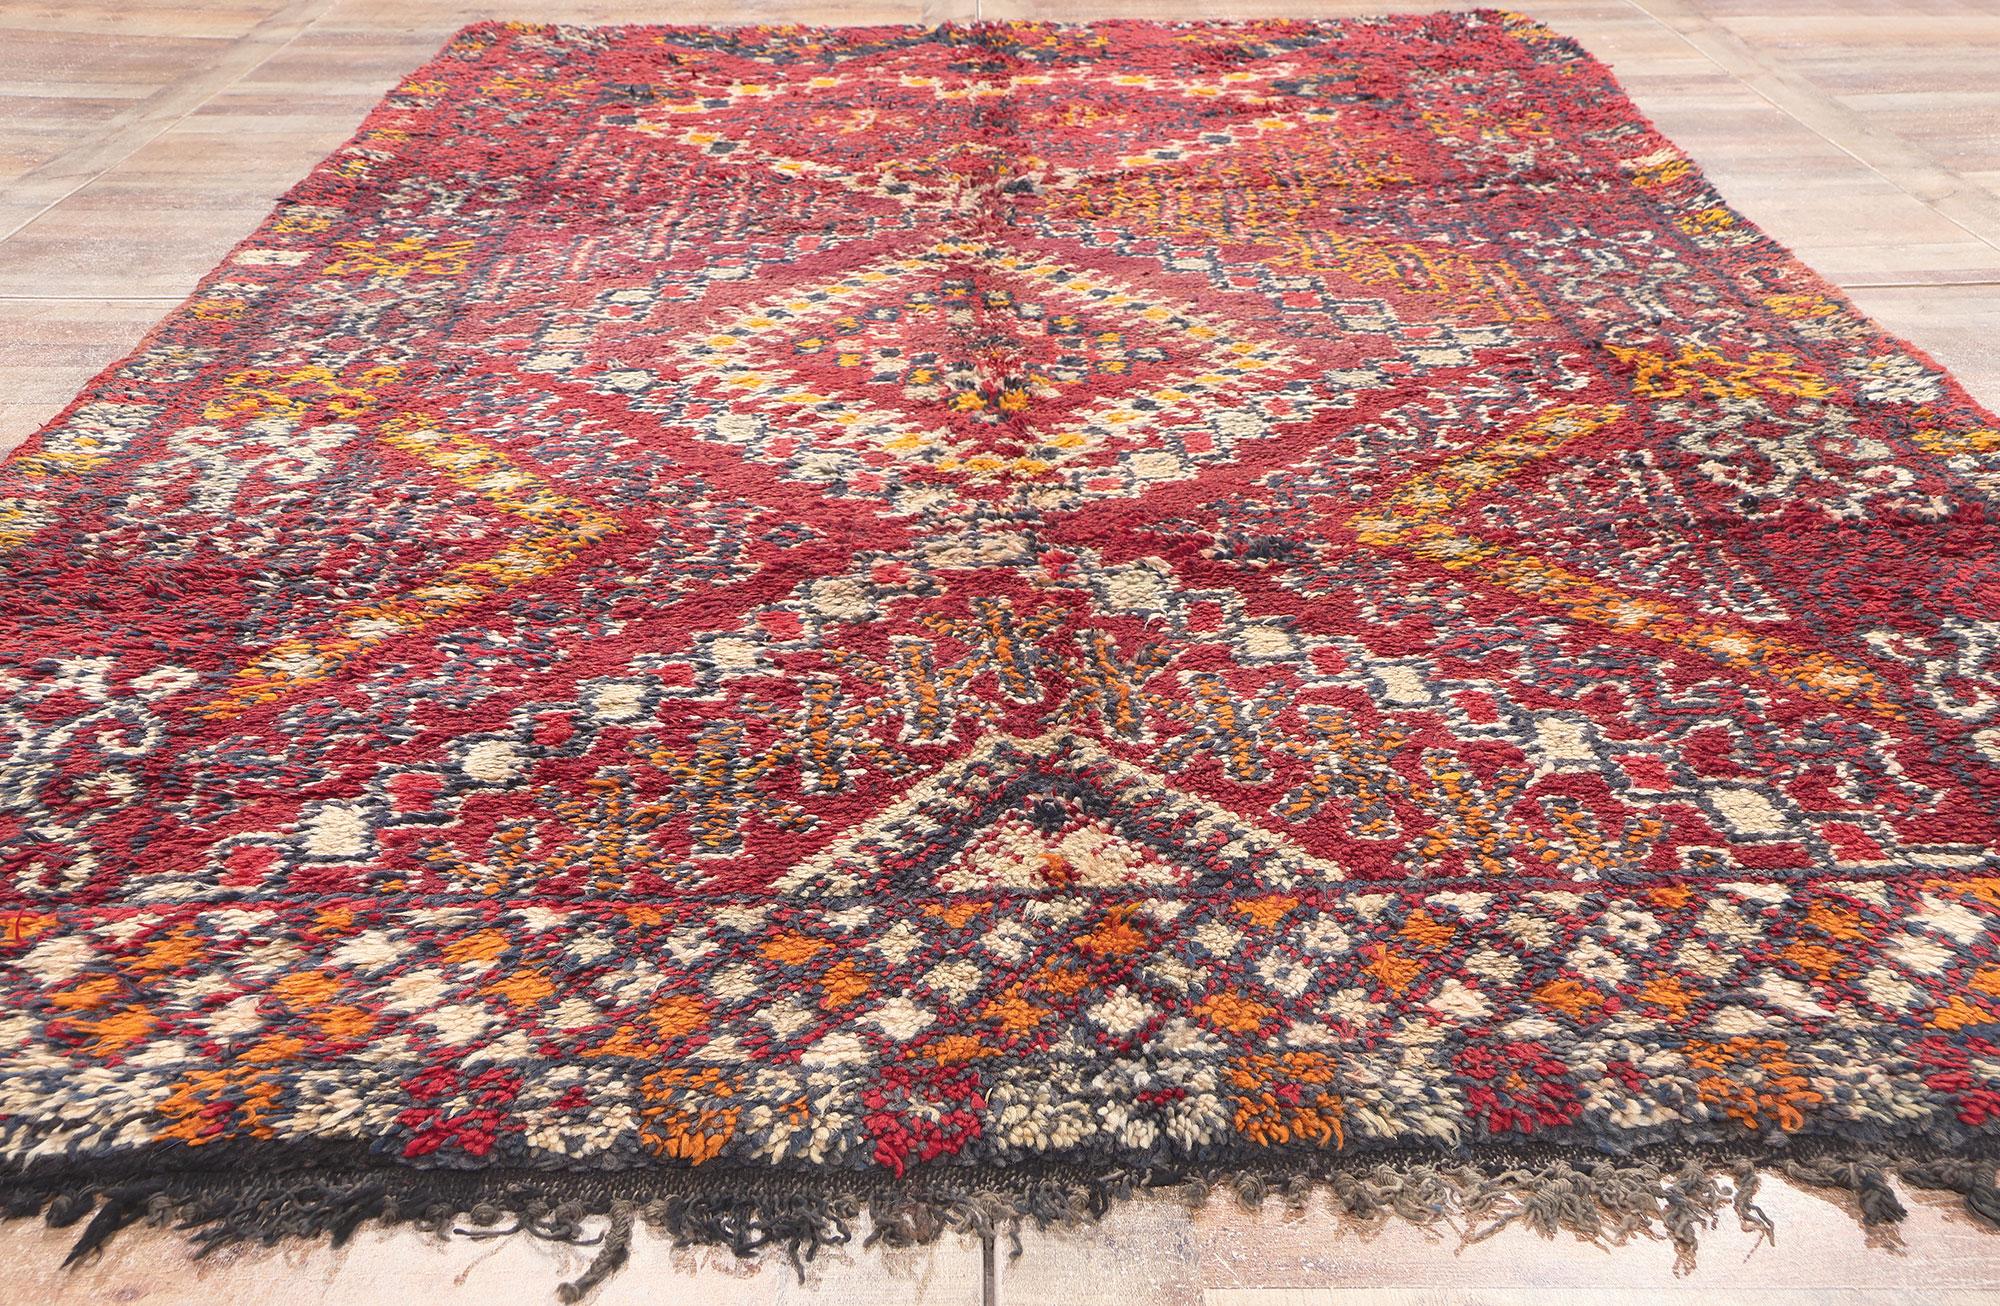 Vintage Beni MGuild Moroccan Rug, Tribal Enchantment Meets Midcentury Modern For Sale 1